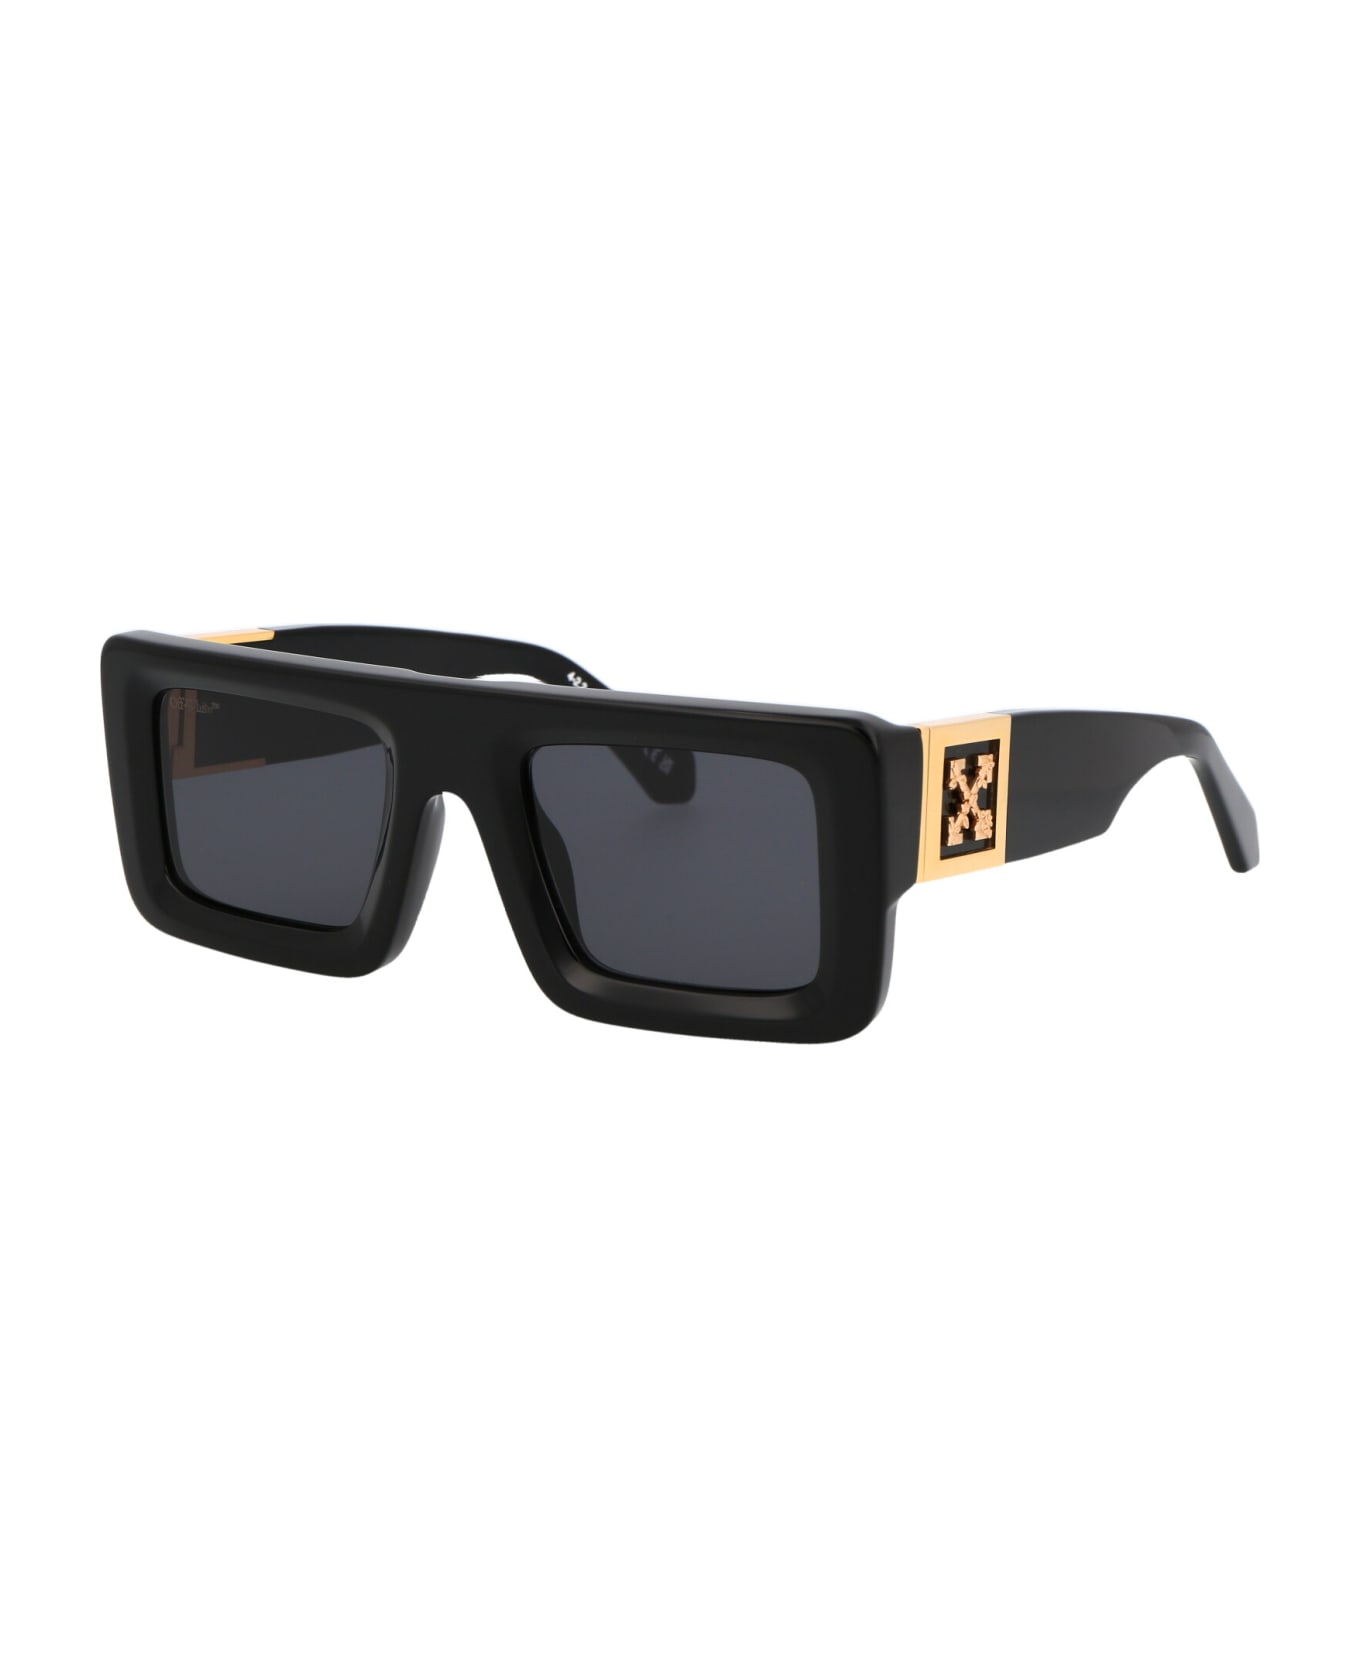 Off-White Leonardo Sunglasses - 1007 BLACK DARK GREY サングラス